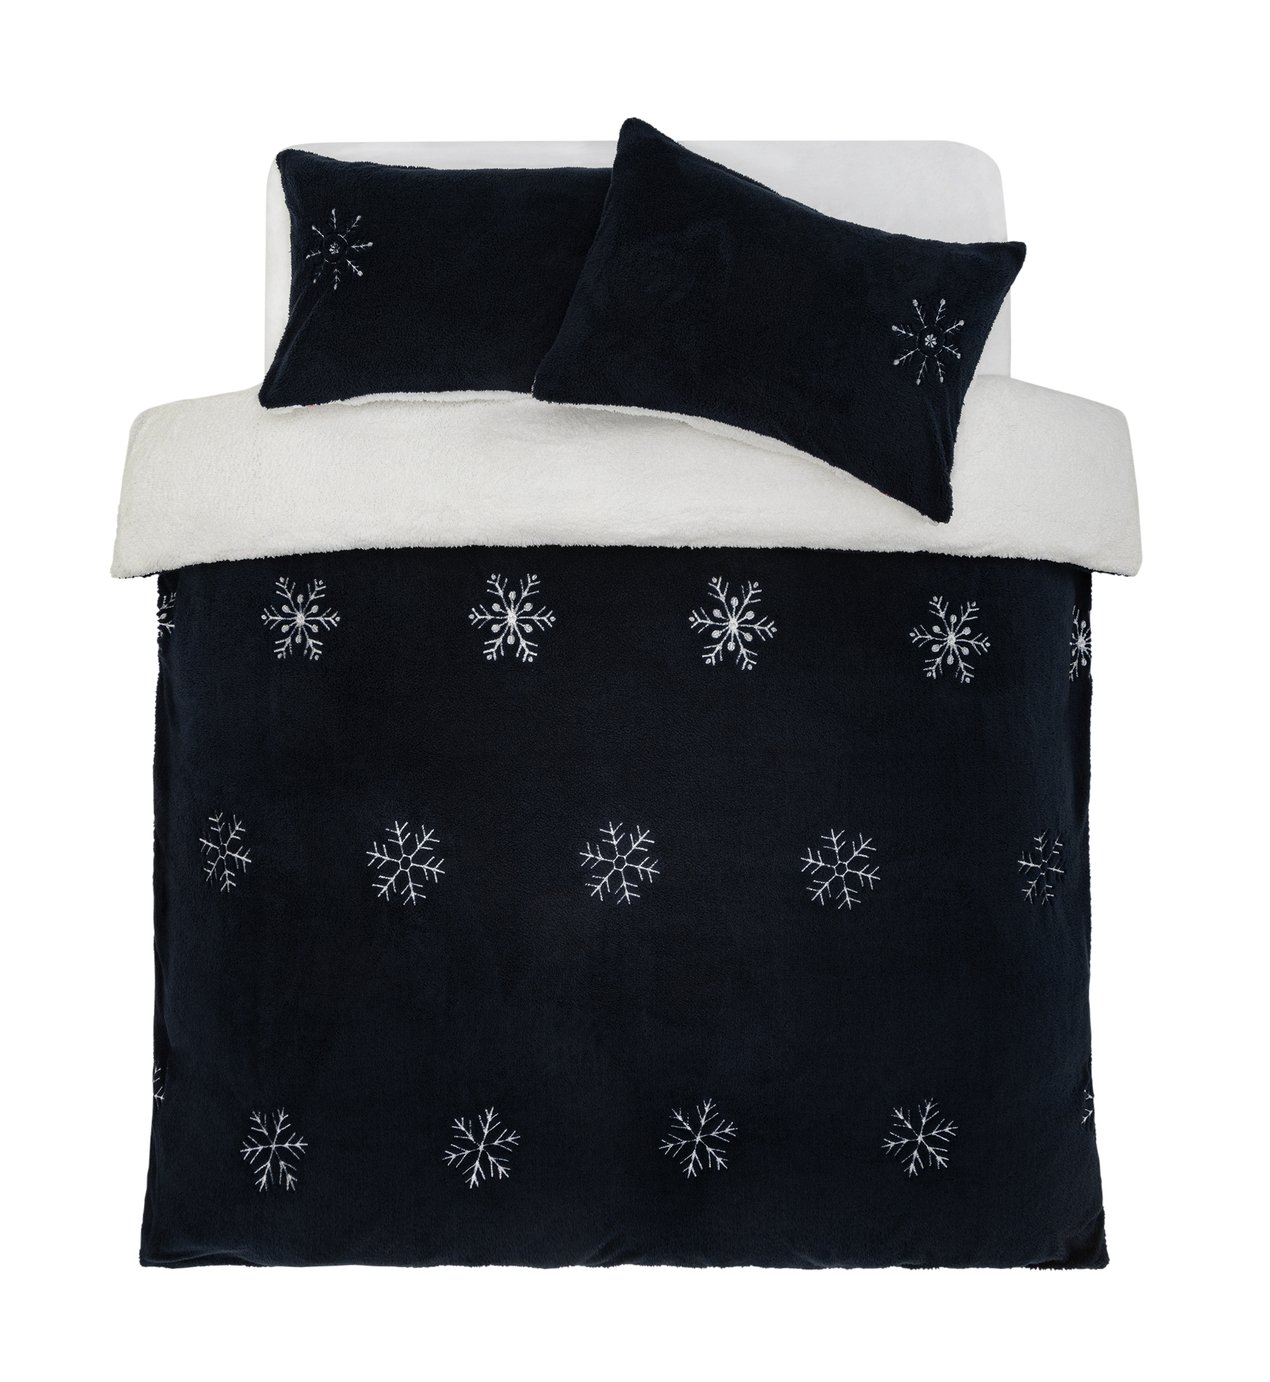 Argos Home Embroidered Snowflake Fleece Bedding Set - Double